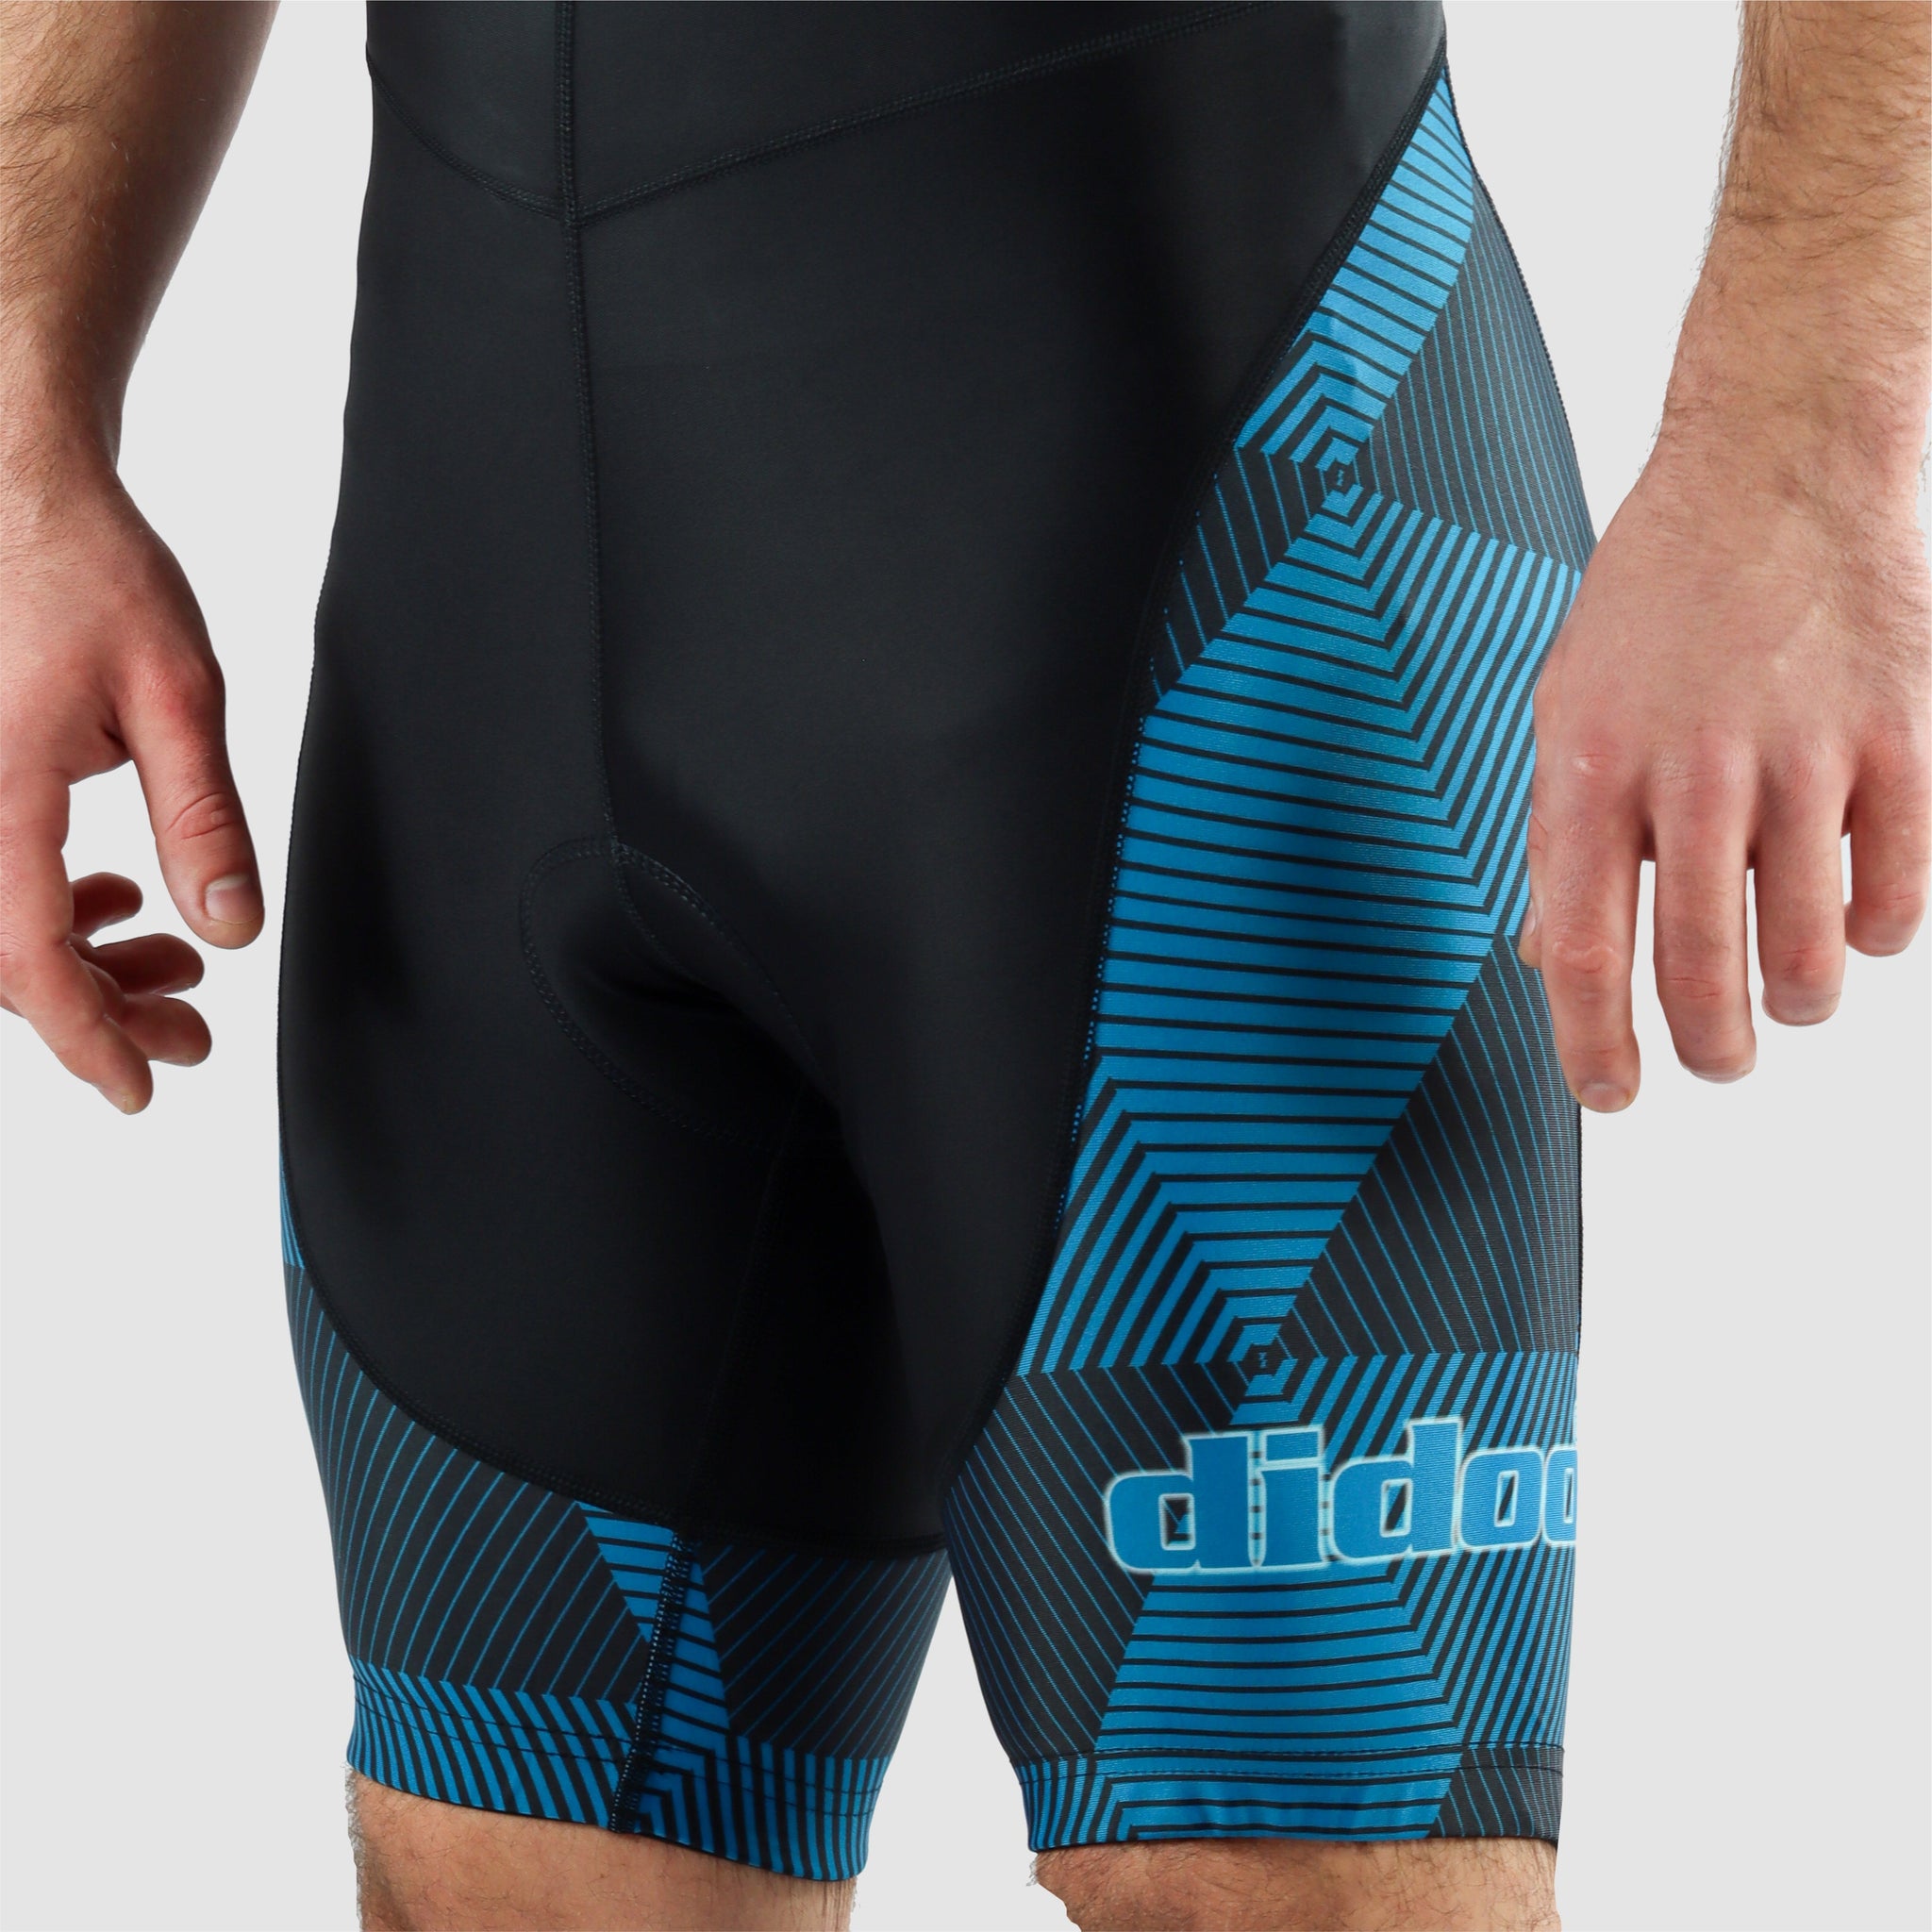 DiDOO Men's Classic Quick Dry Padded Cycling Bib Shorts Black and Light Blue